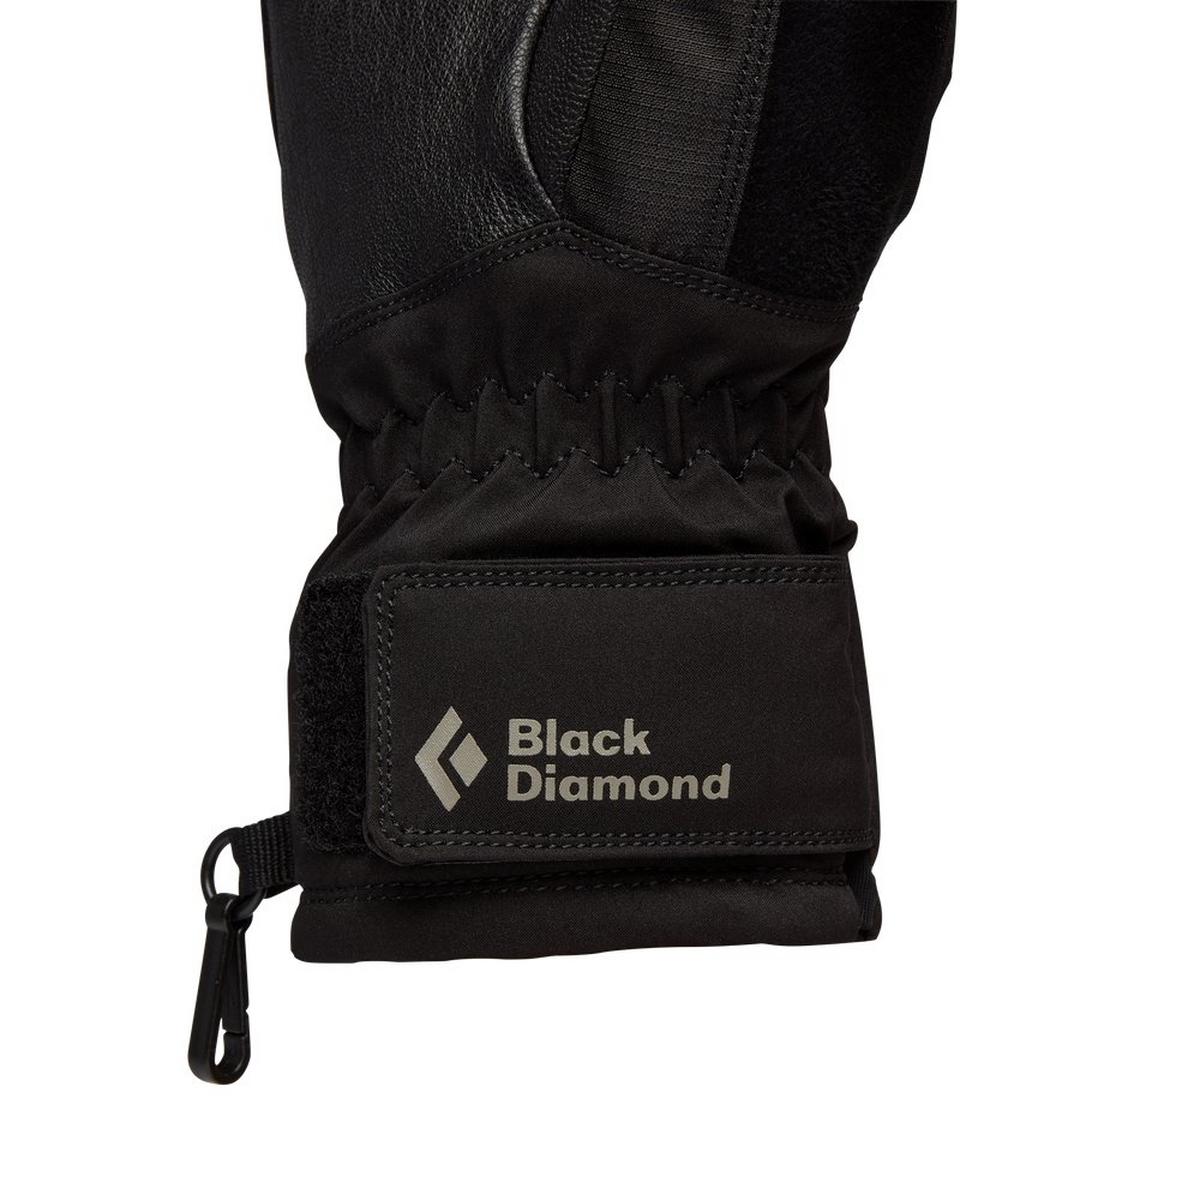 Black Diamond Equipment Women's Mission GTX Glove - Black